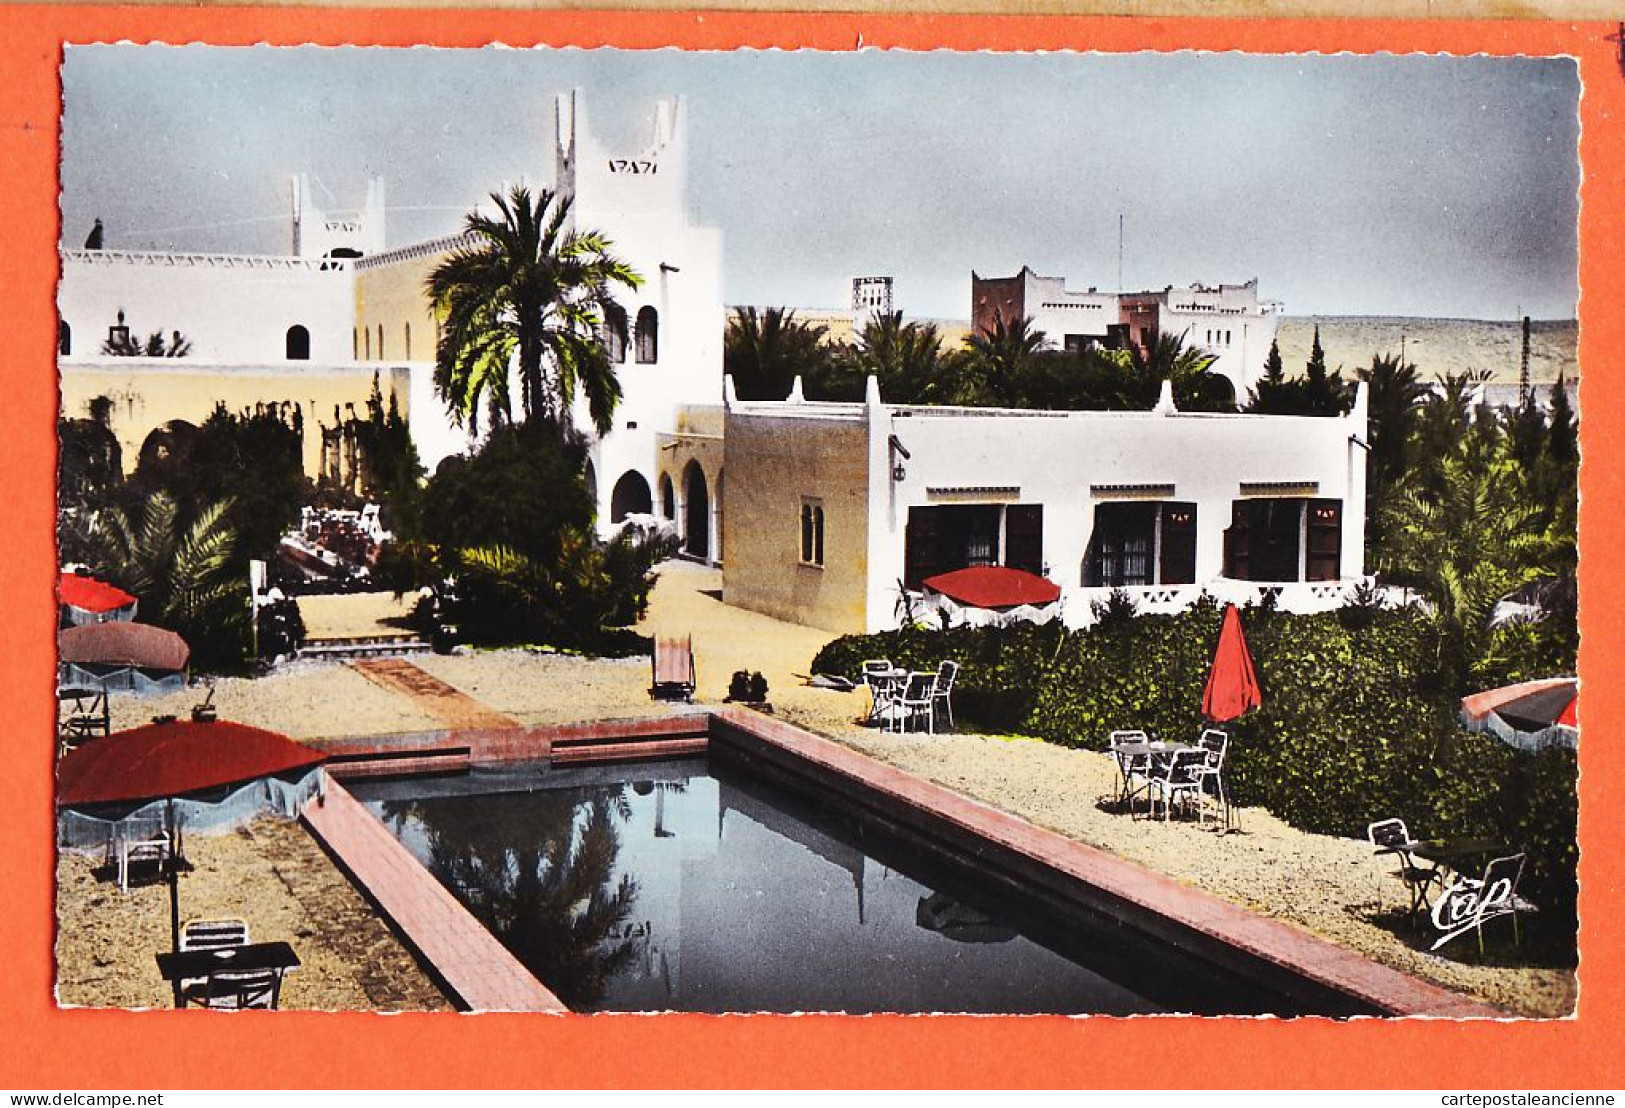 08182 ● GHARDAIA Algérie Piscine Hotel TRANSATLANTIQUE 1960s Real-Photo-Bromure CAP 561 - Ghardaïa